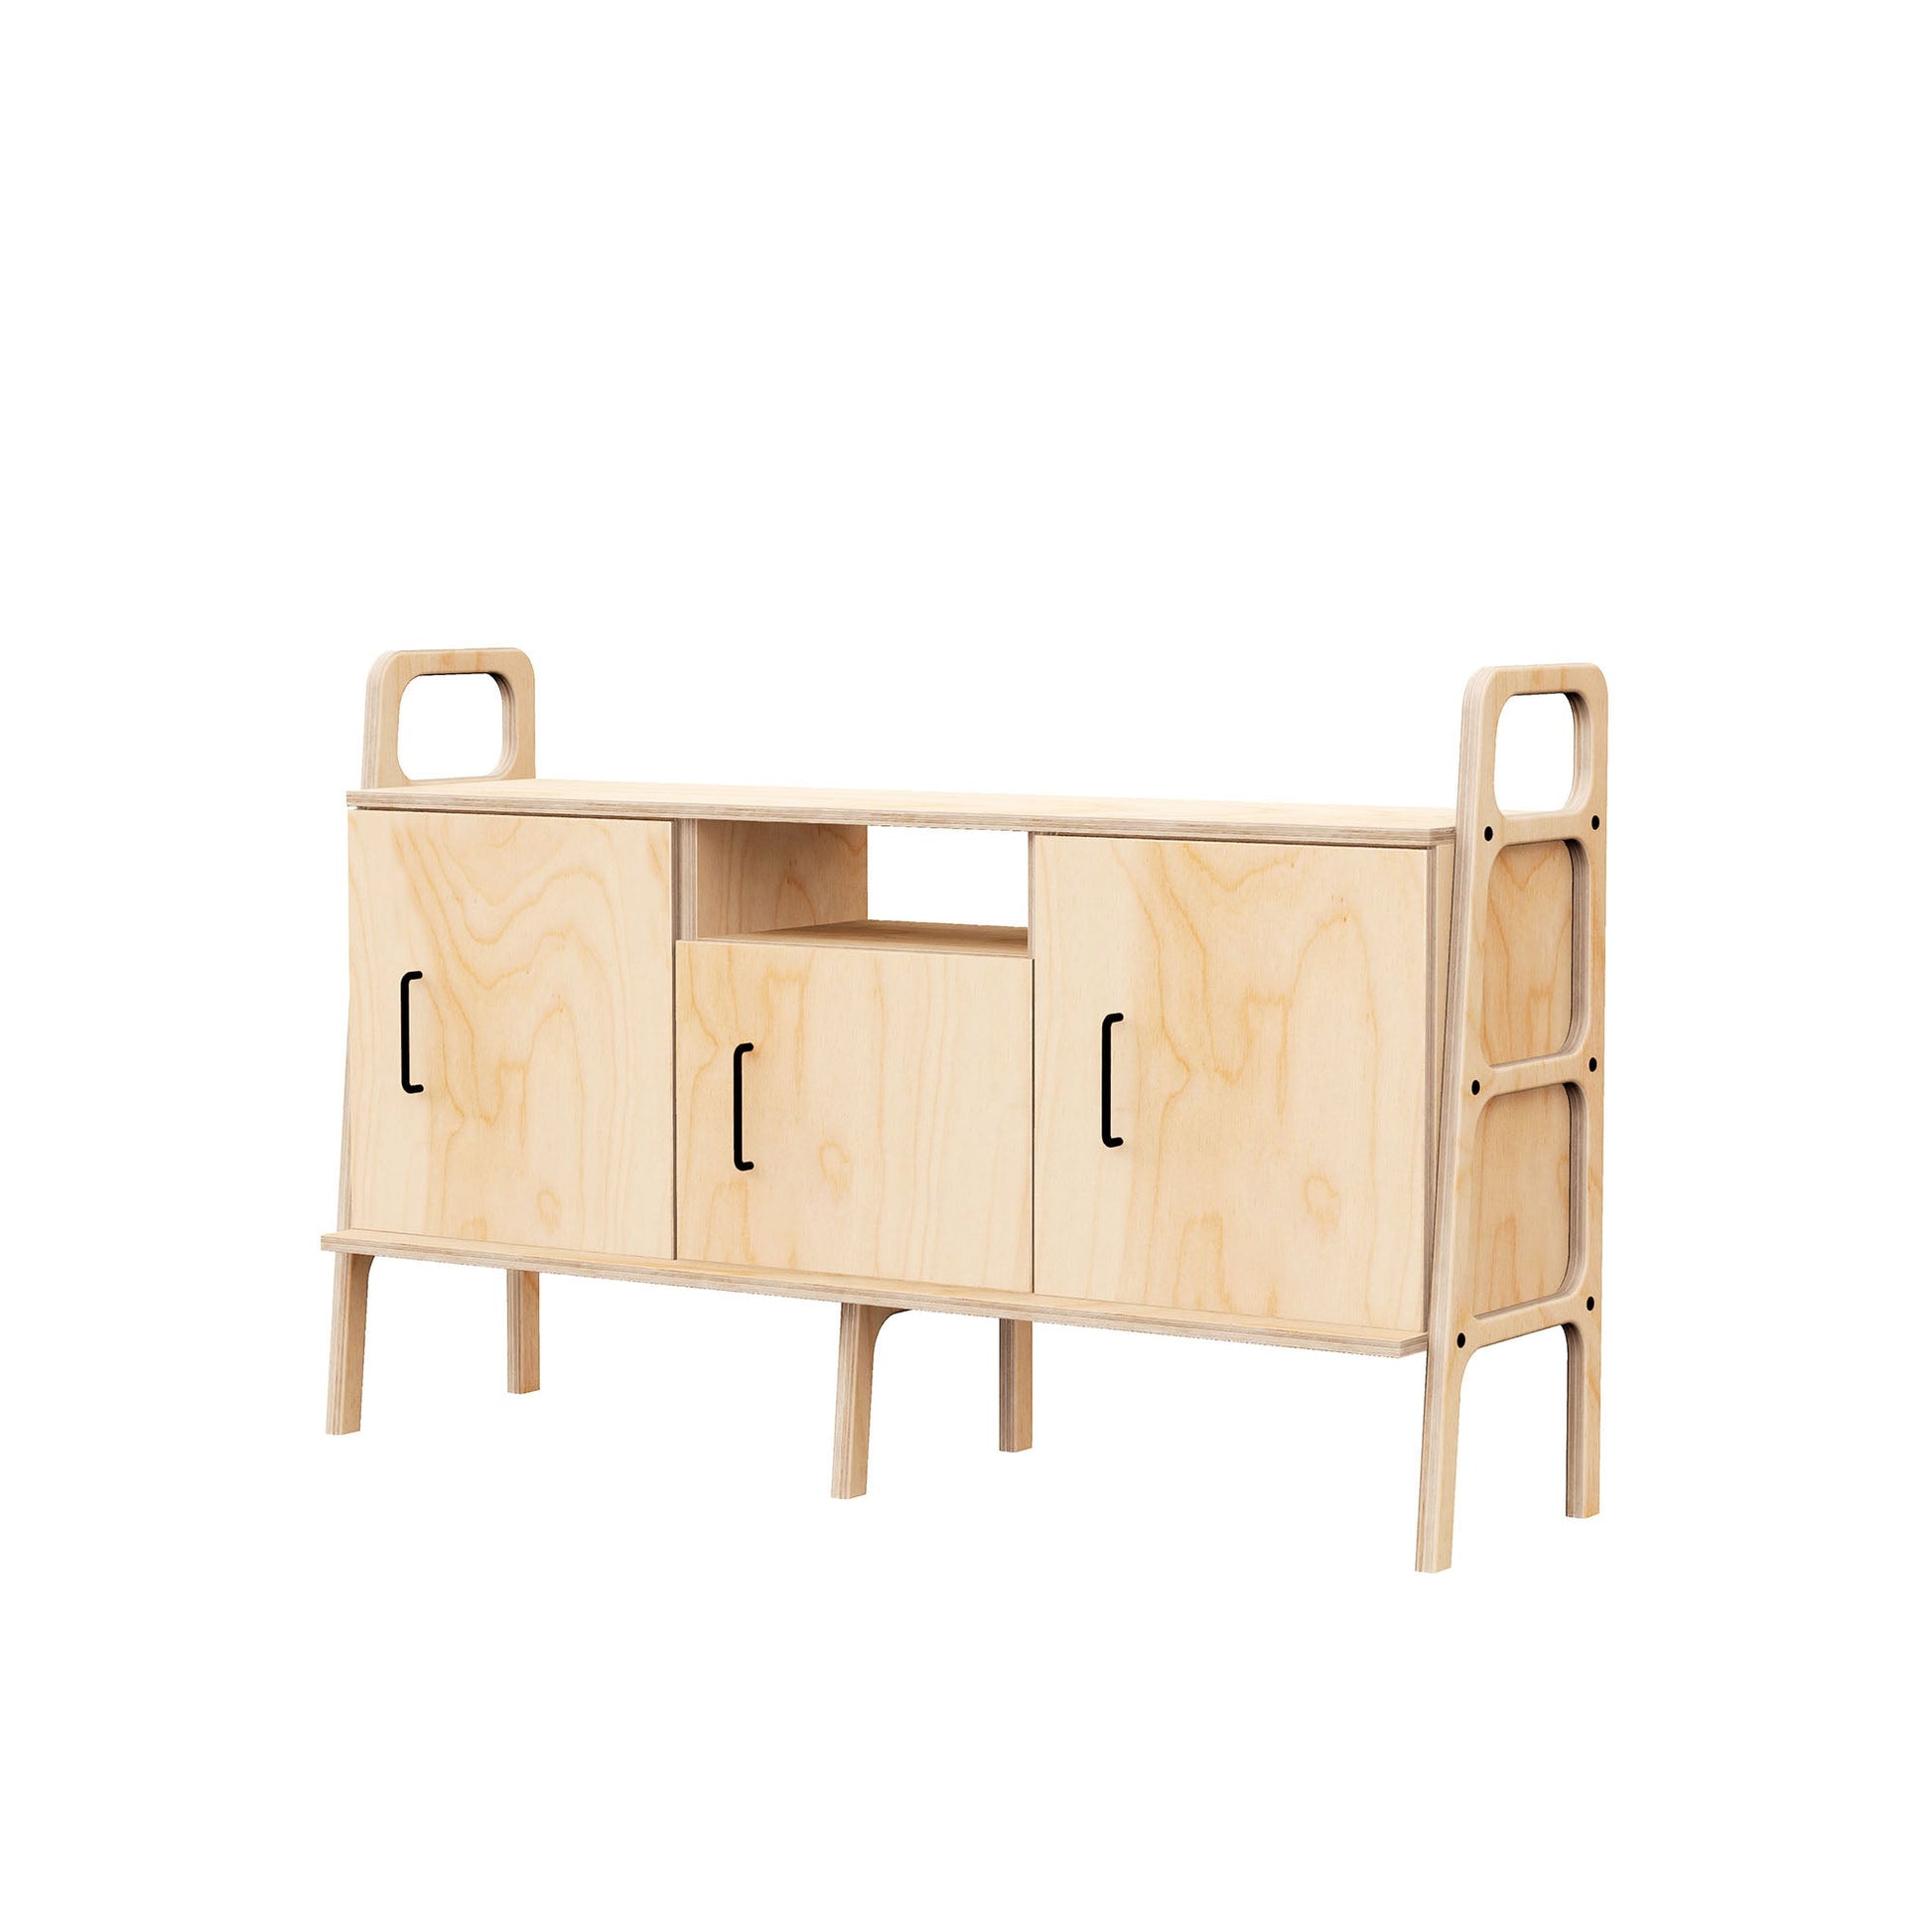 minimalist-sideboard-mid-century-modern-design.jpgminimalist-sideboard-mid-century-modern-design.jpg